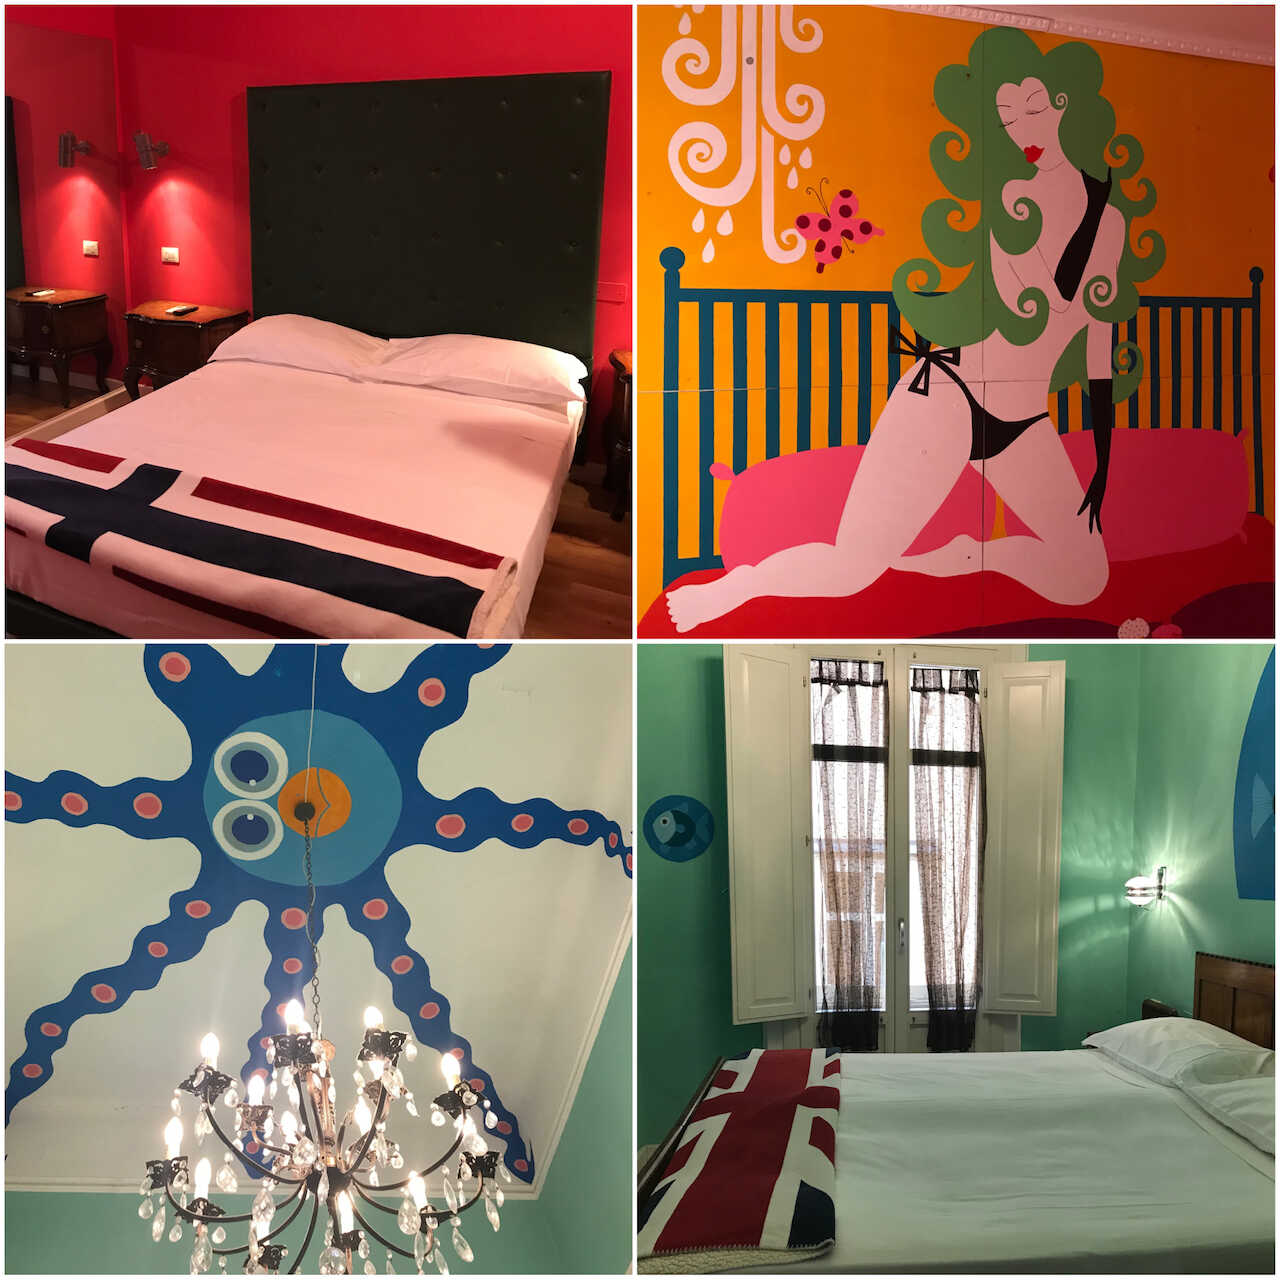 Anmeldelse af Miramare Hotel i Cagliari, Sardinien